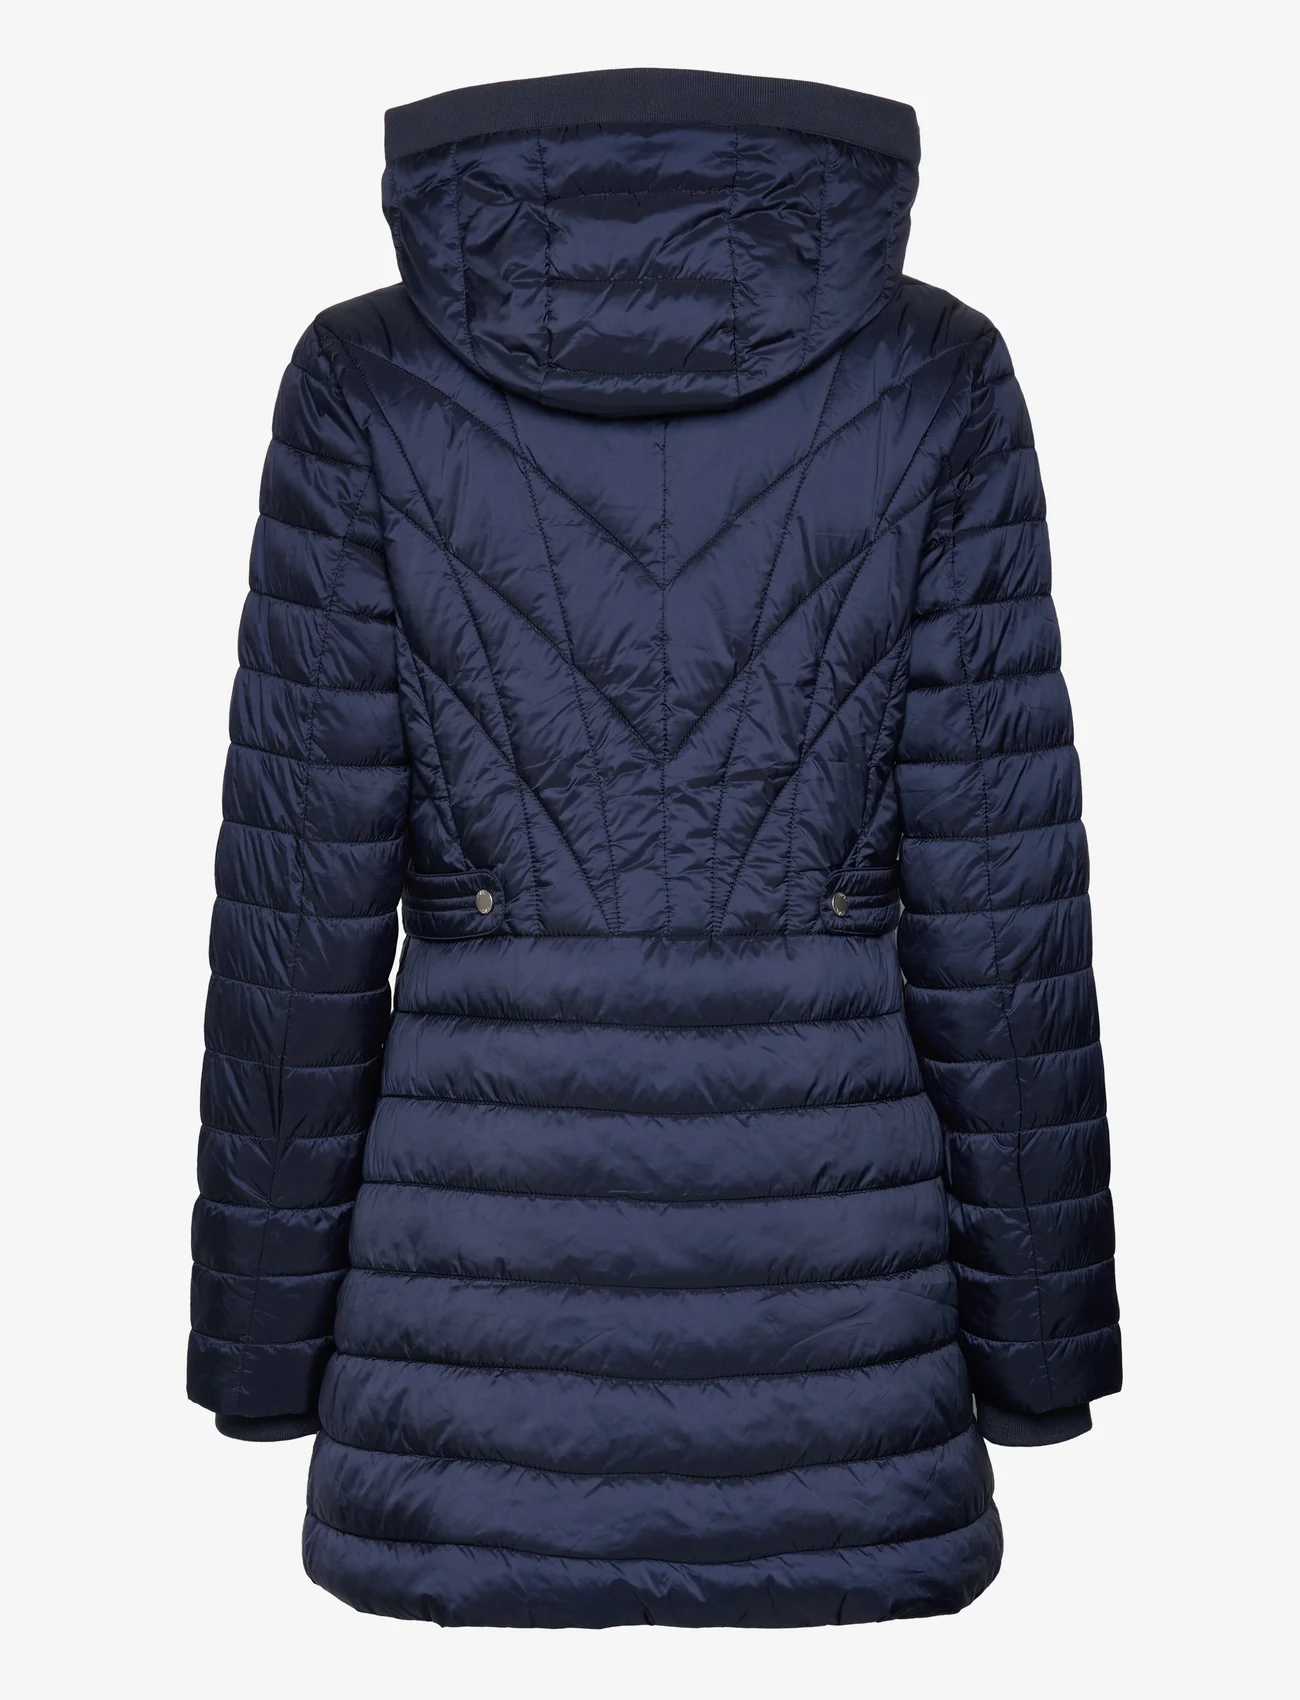 Esprit Collection - Jackets outdoor woven - manteaux d'hiver - navy - 1